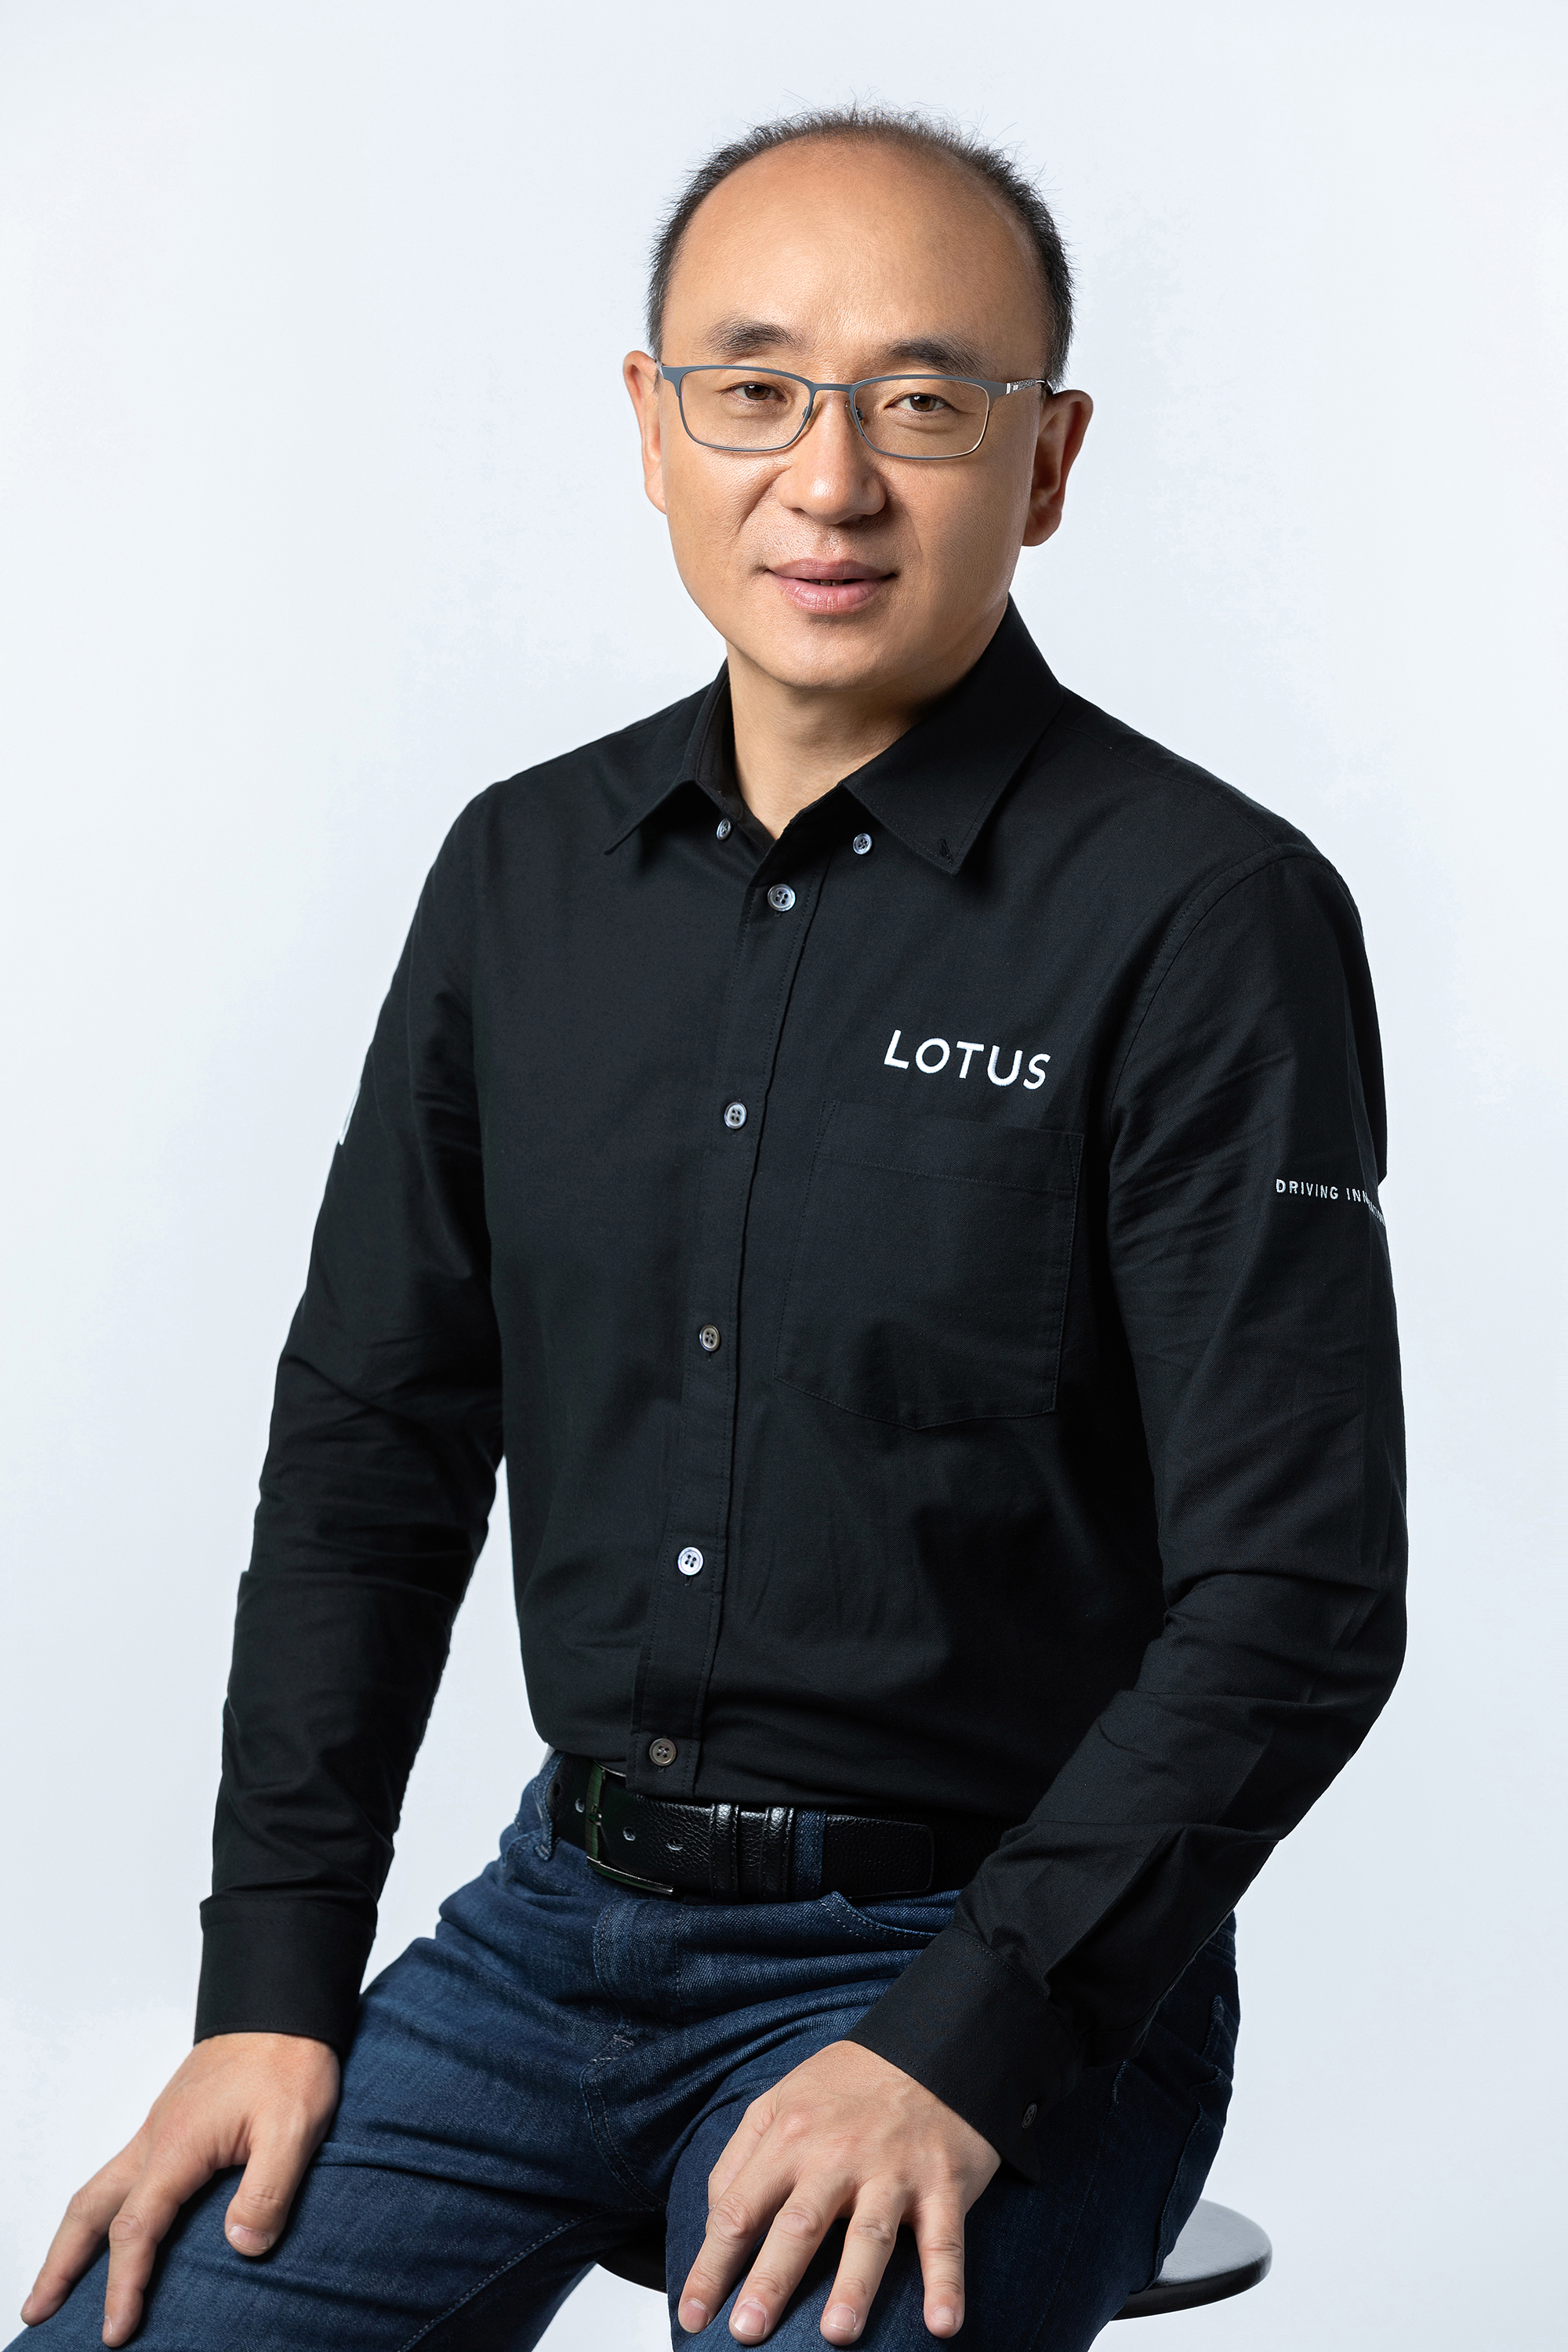 CEO Feng Qingfeng